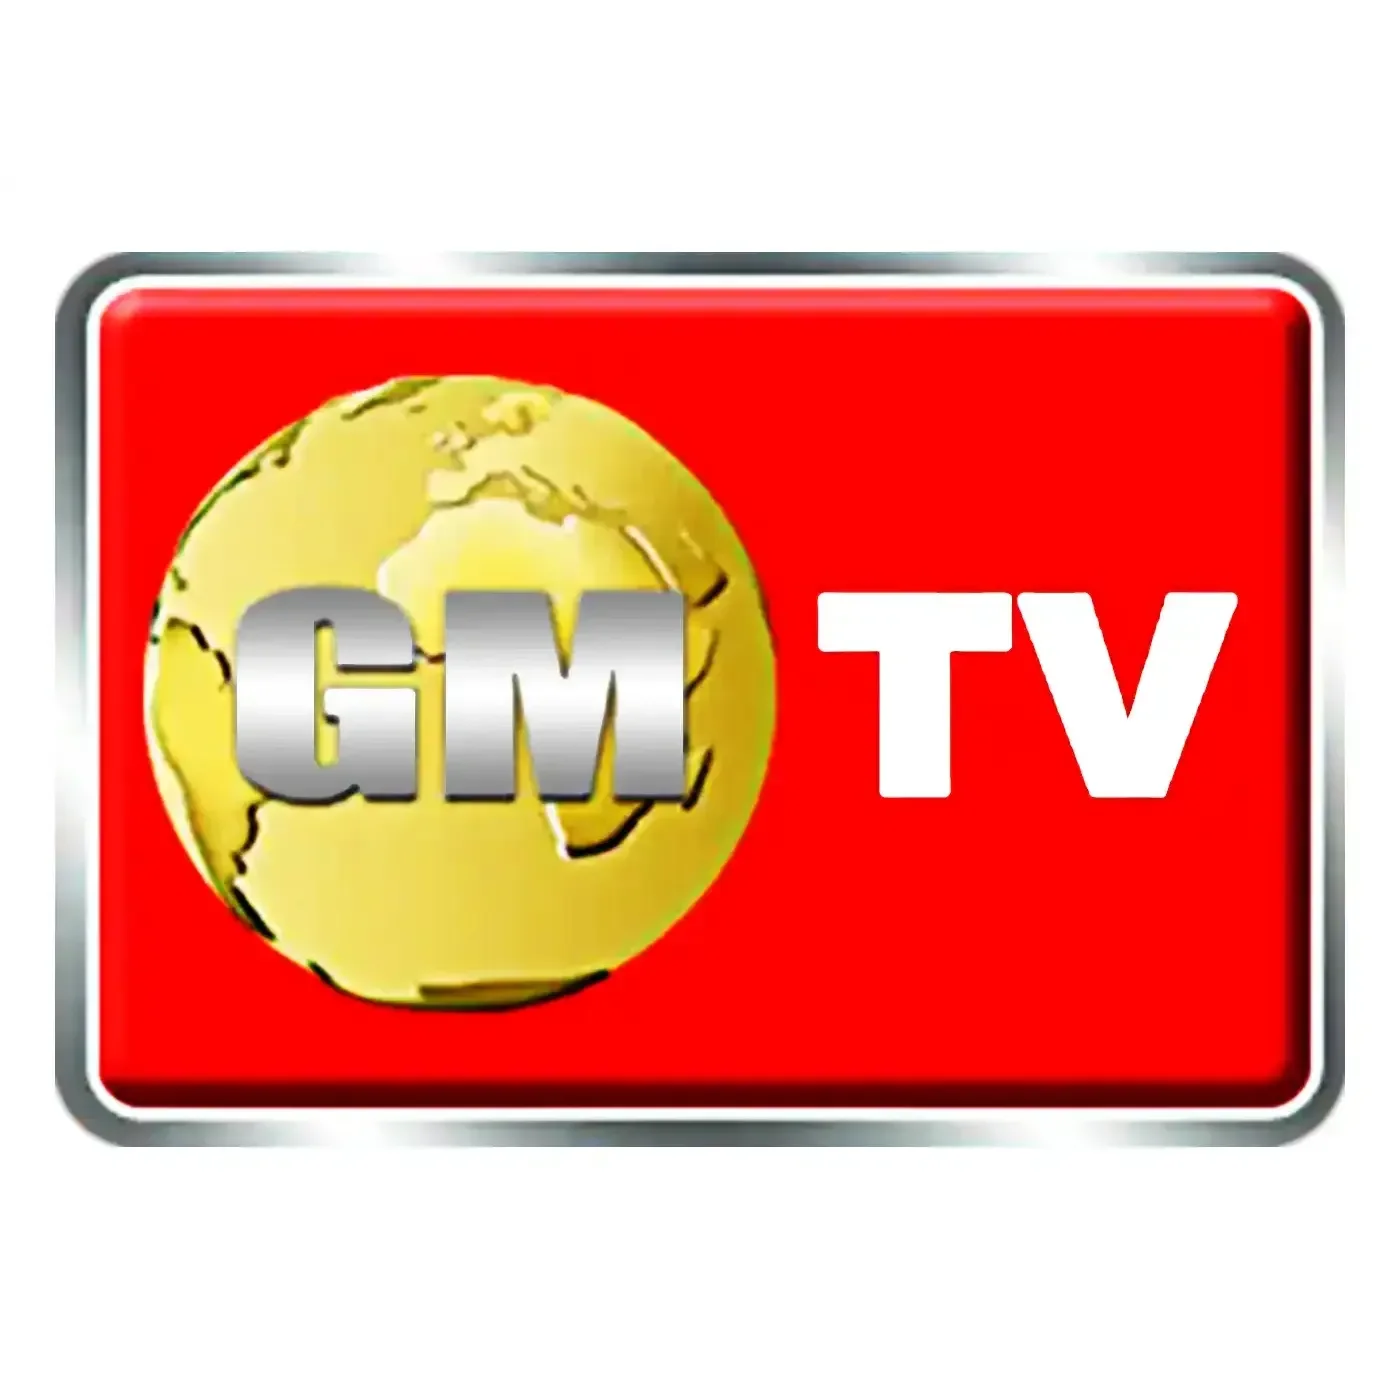 Global Mall TV